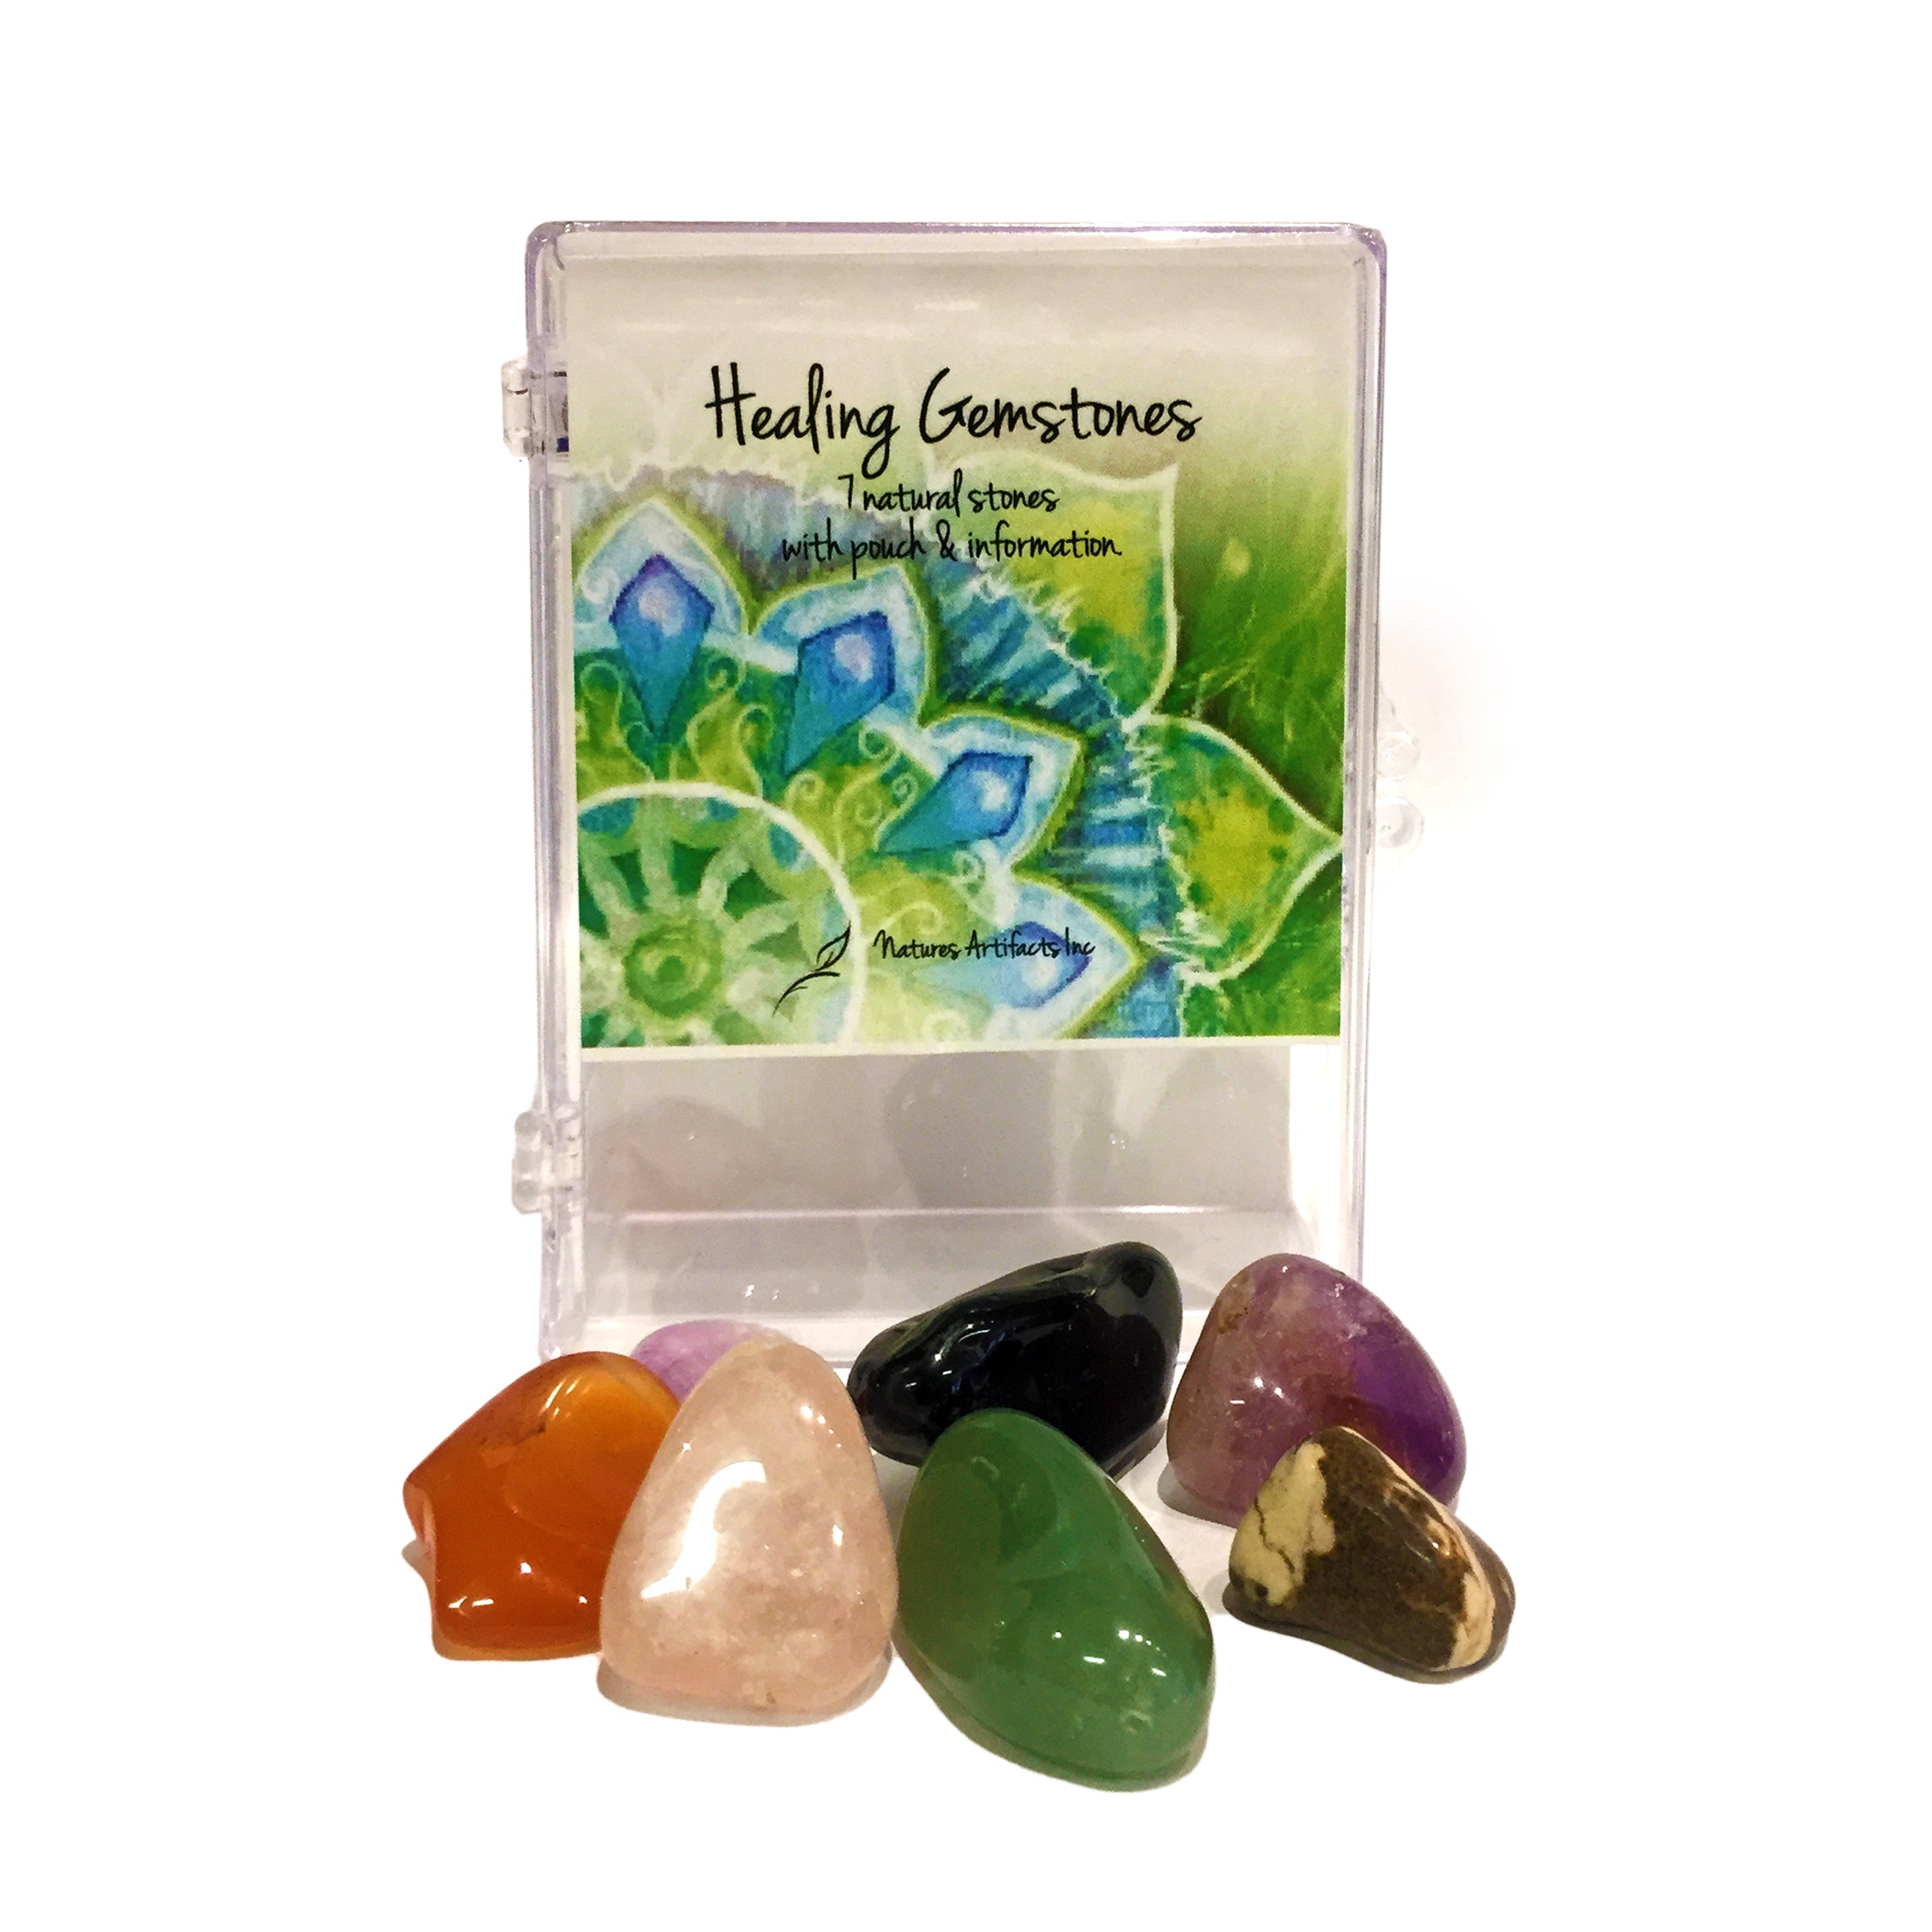 Healing Gemstone, 7 Natural stones